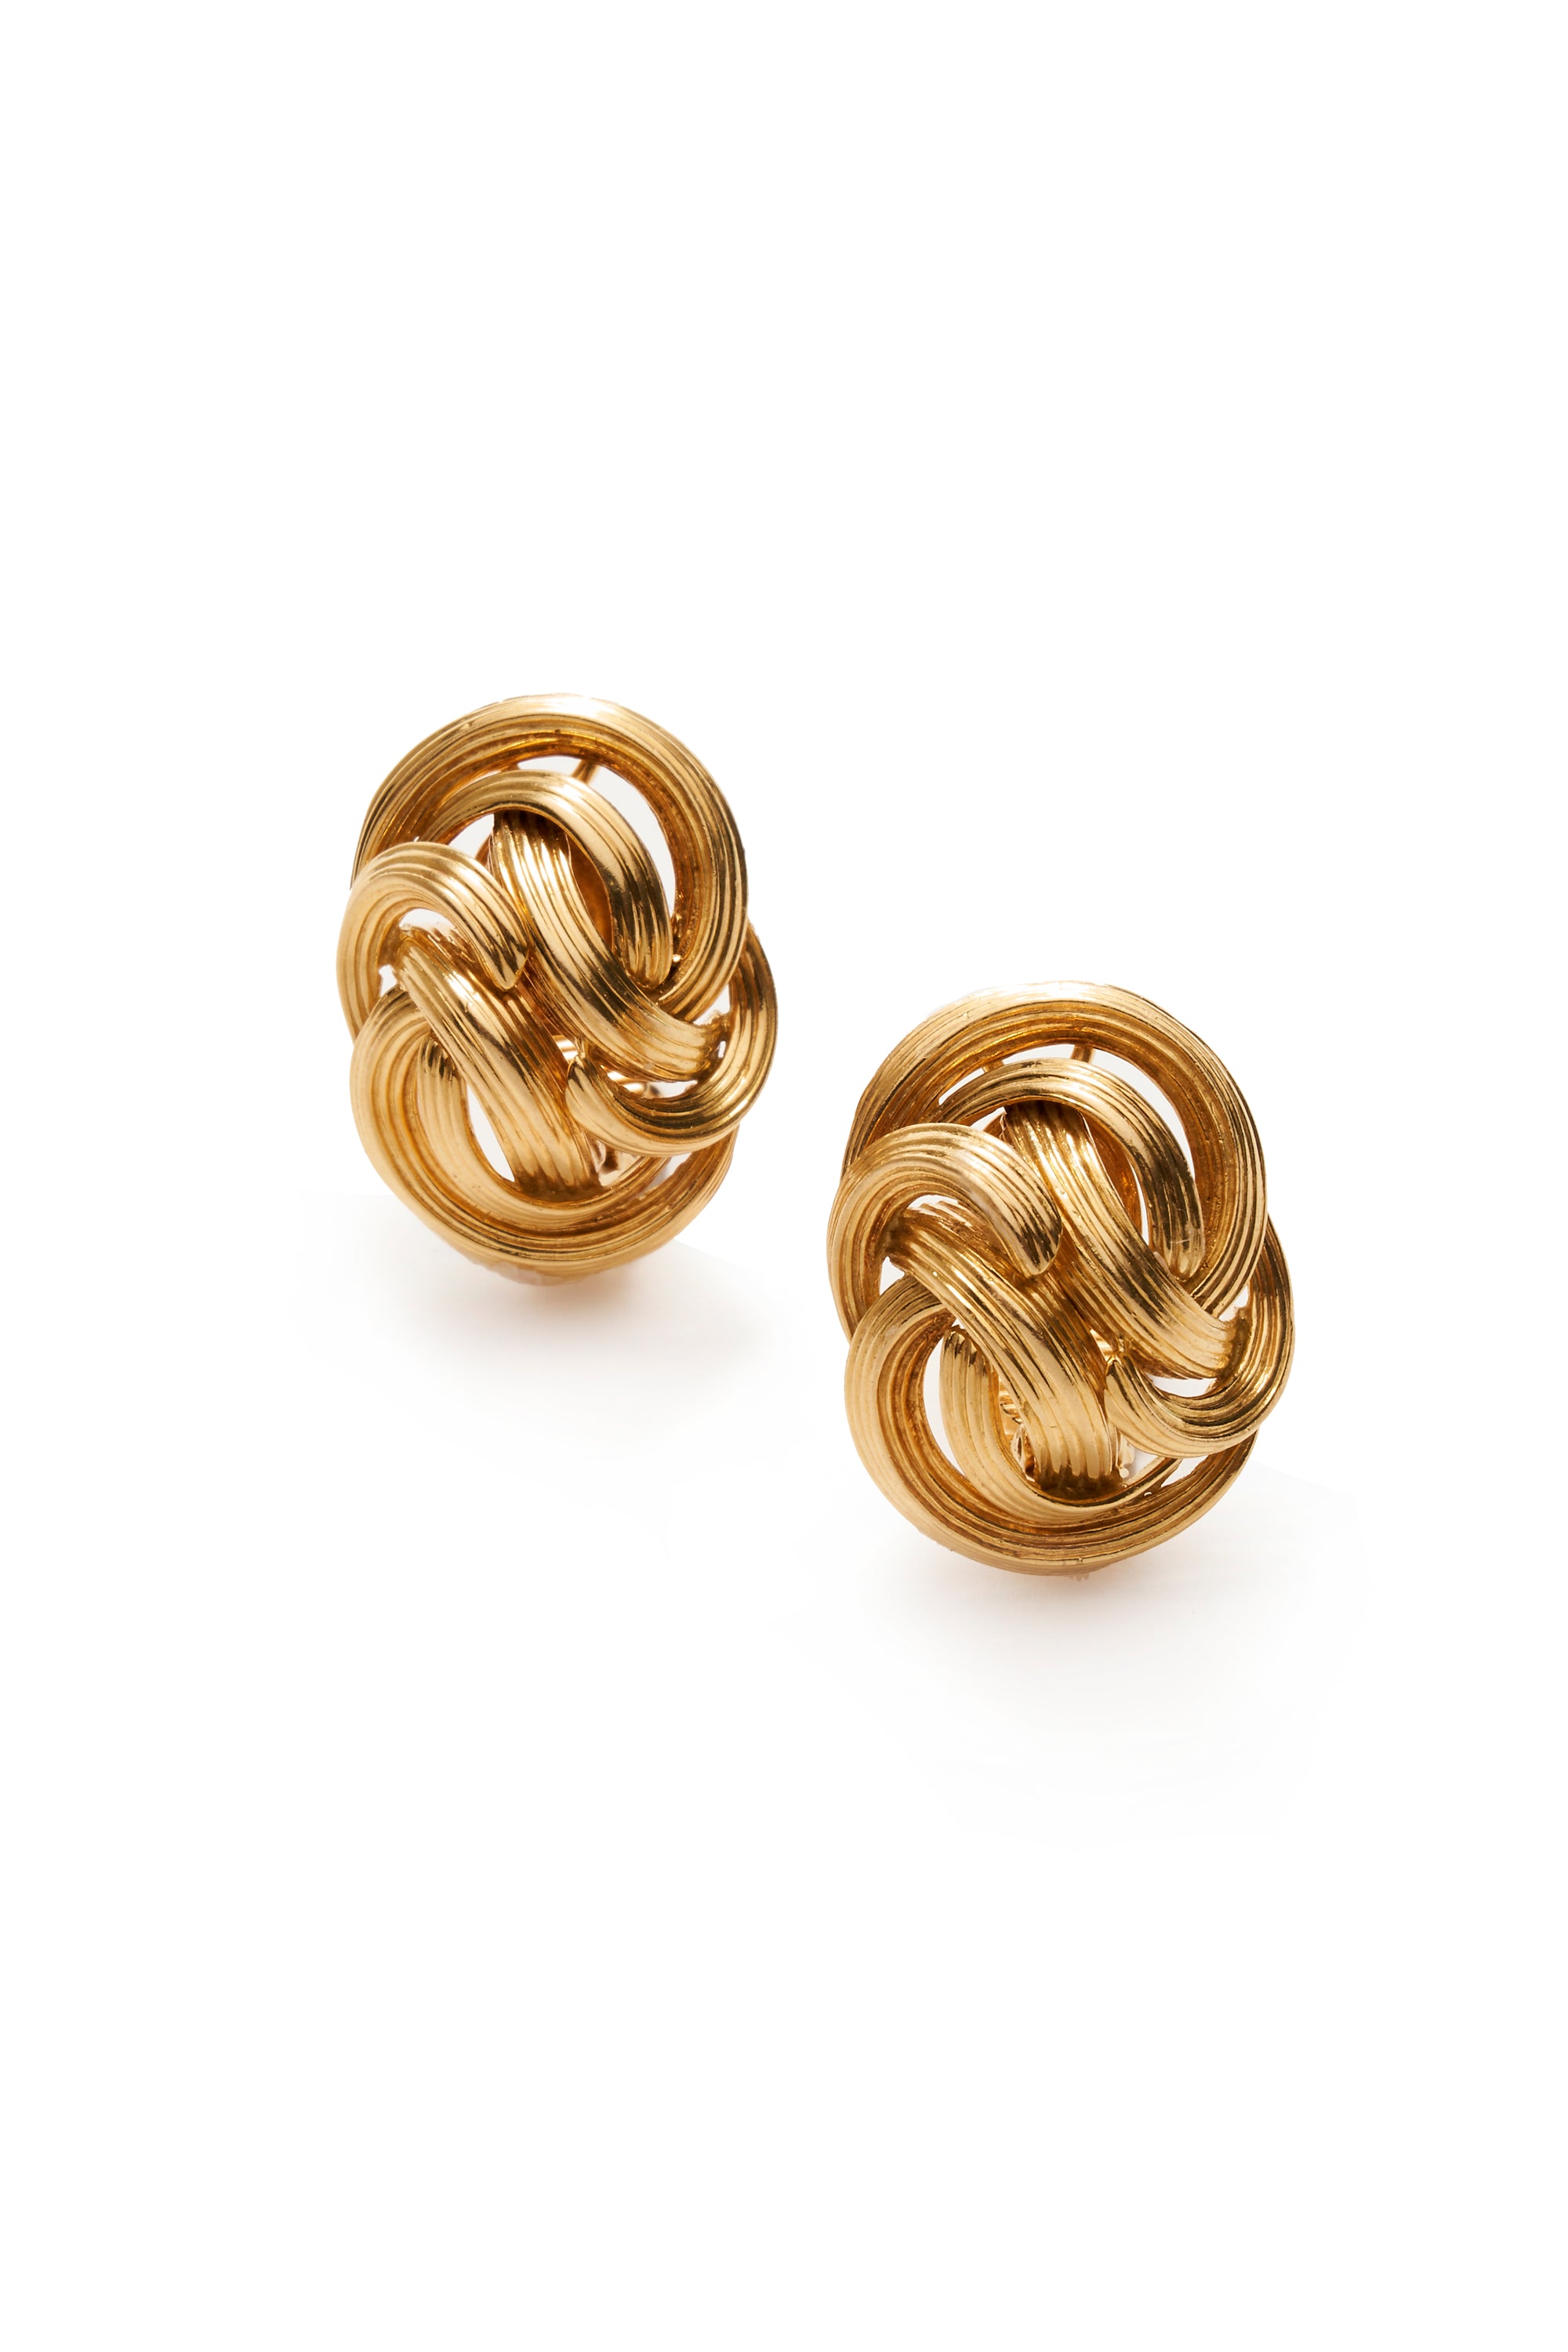 Tiffany Angela Cummings Gold Knot Clip Earrings